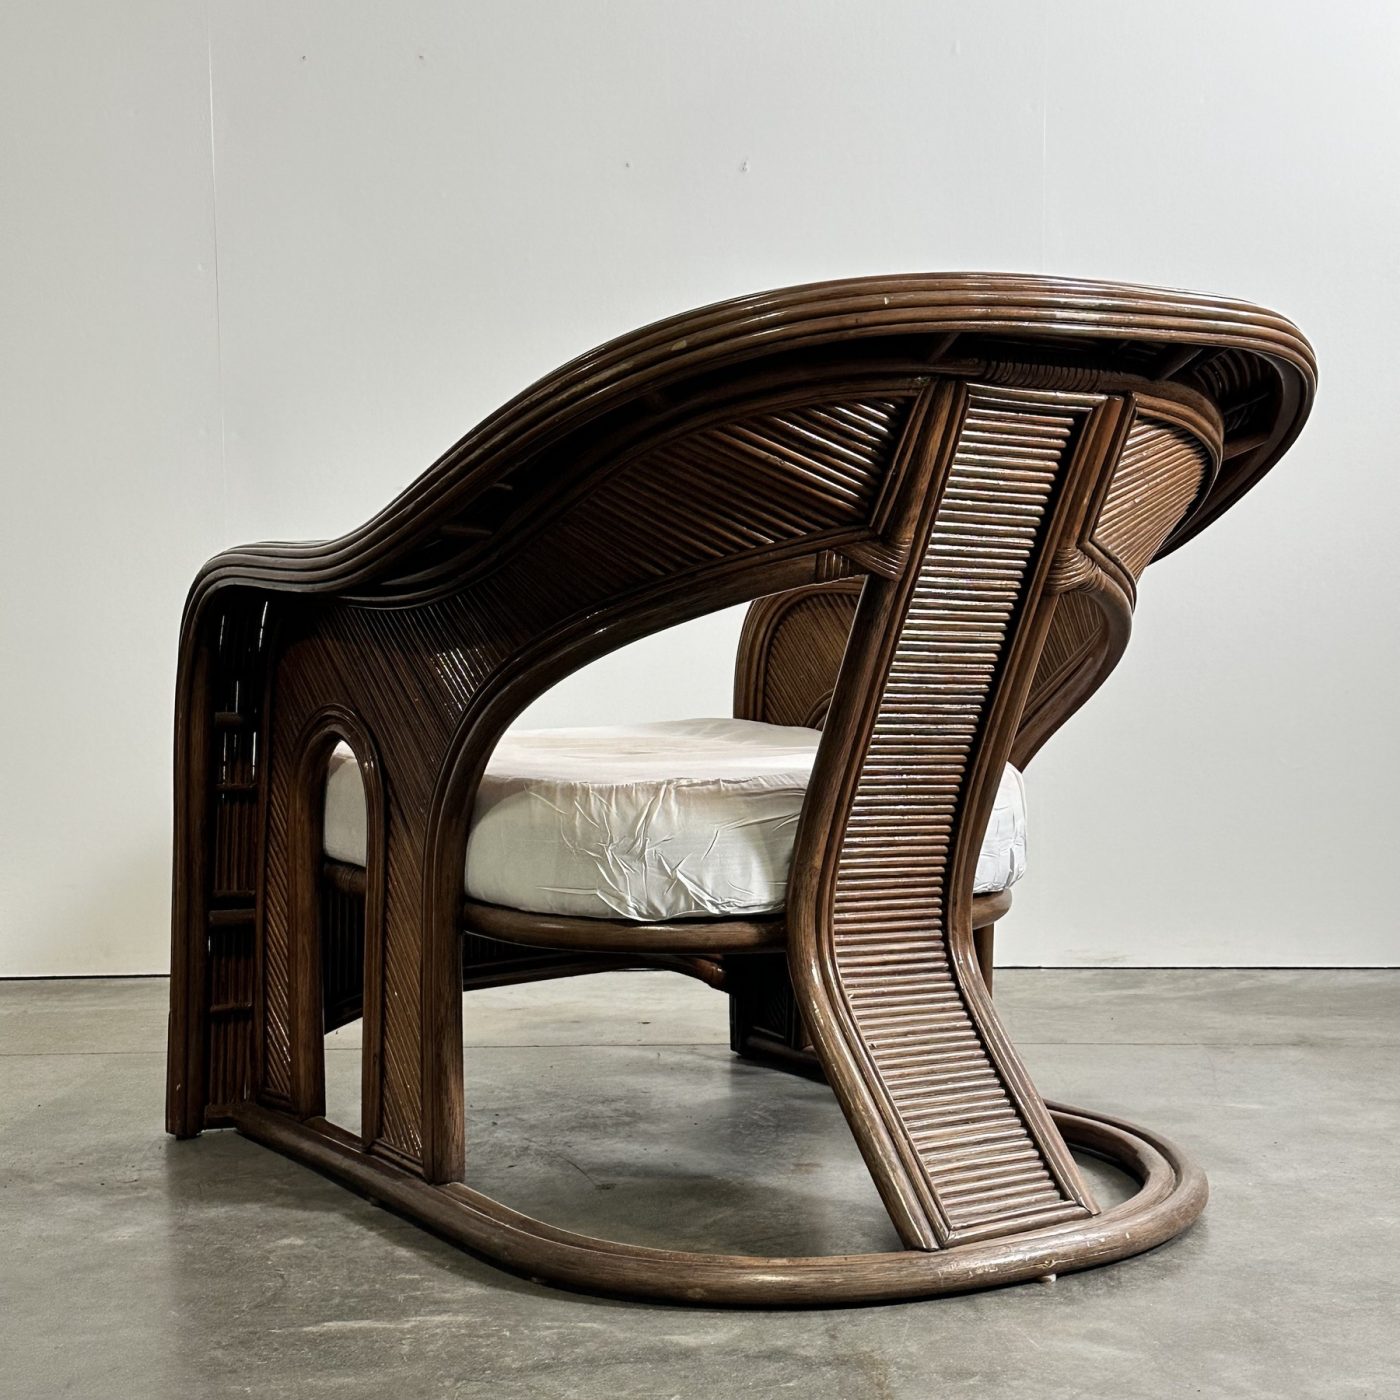 objet-vagabond-rattan-armchairs0007